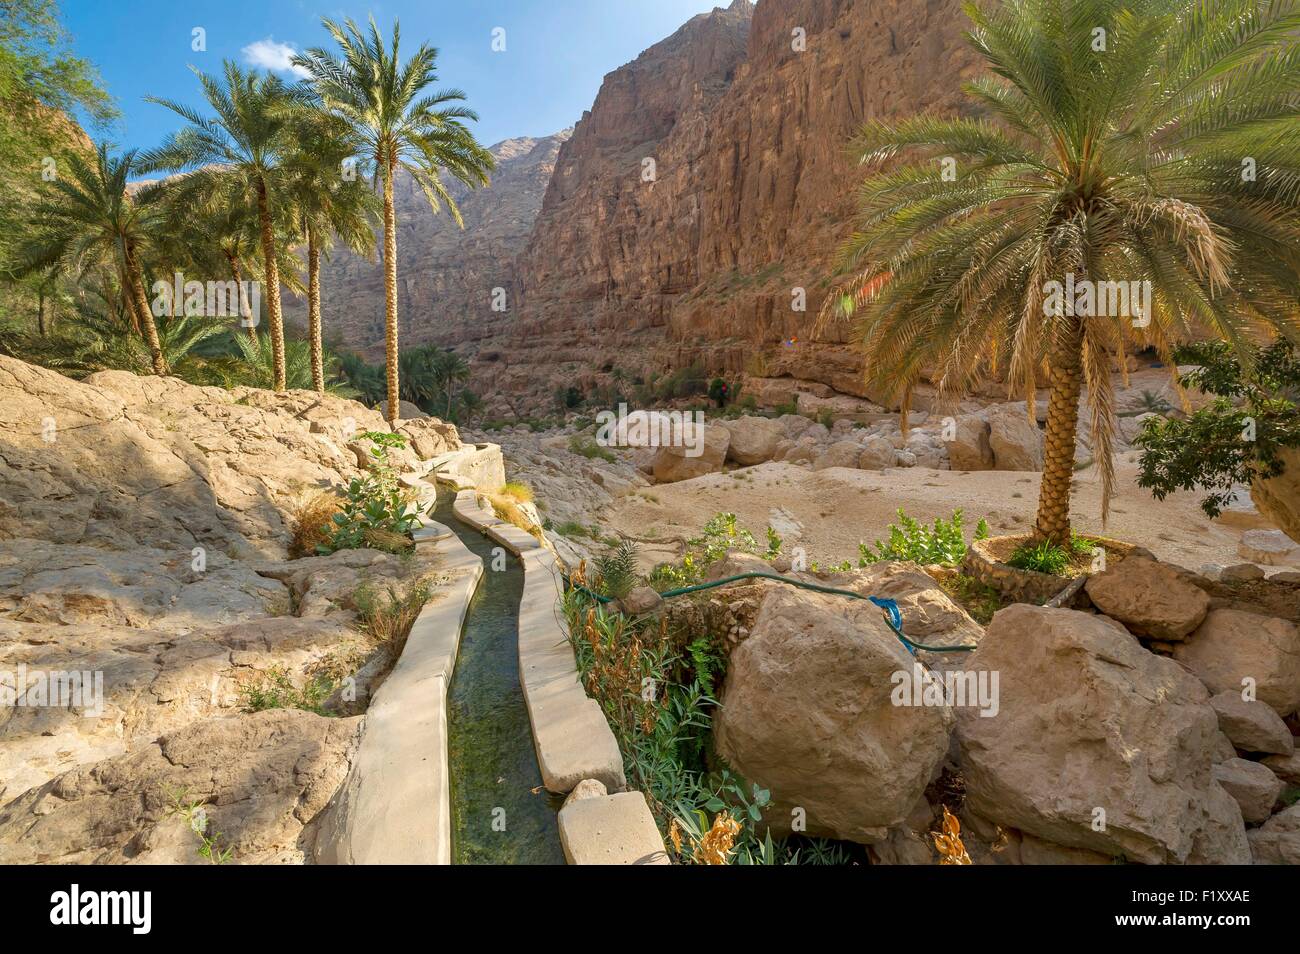 Oman, Wadi Shab, falaj, or irrigation channel Stock Photo